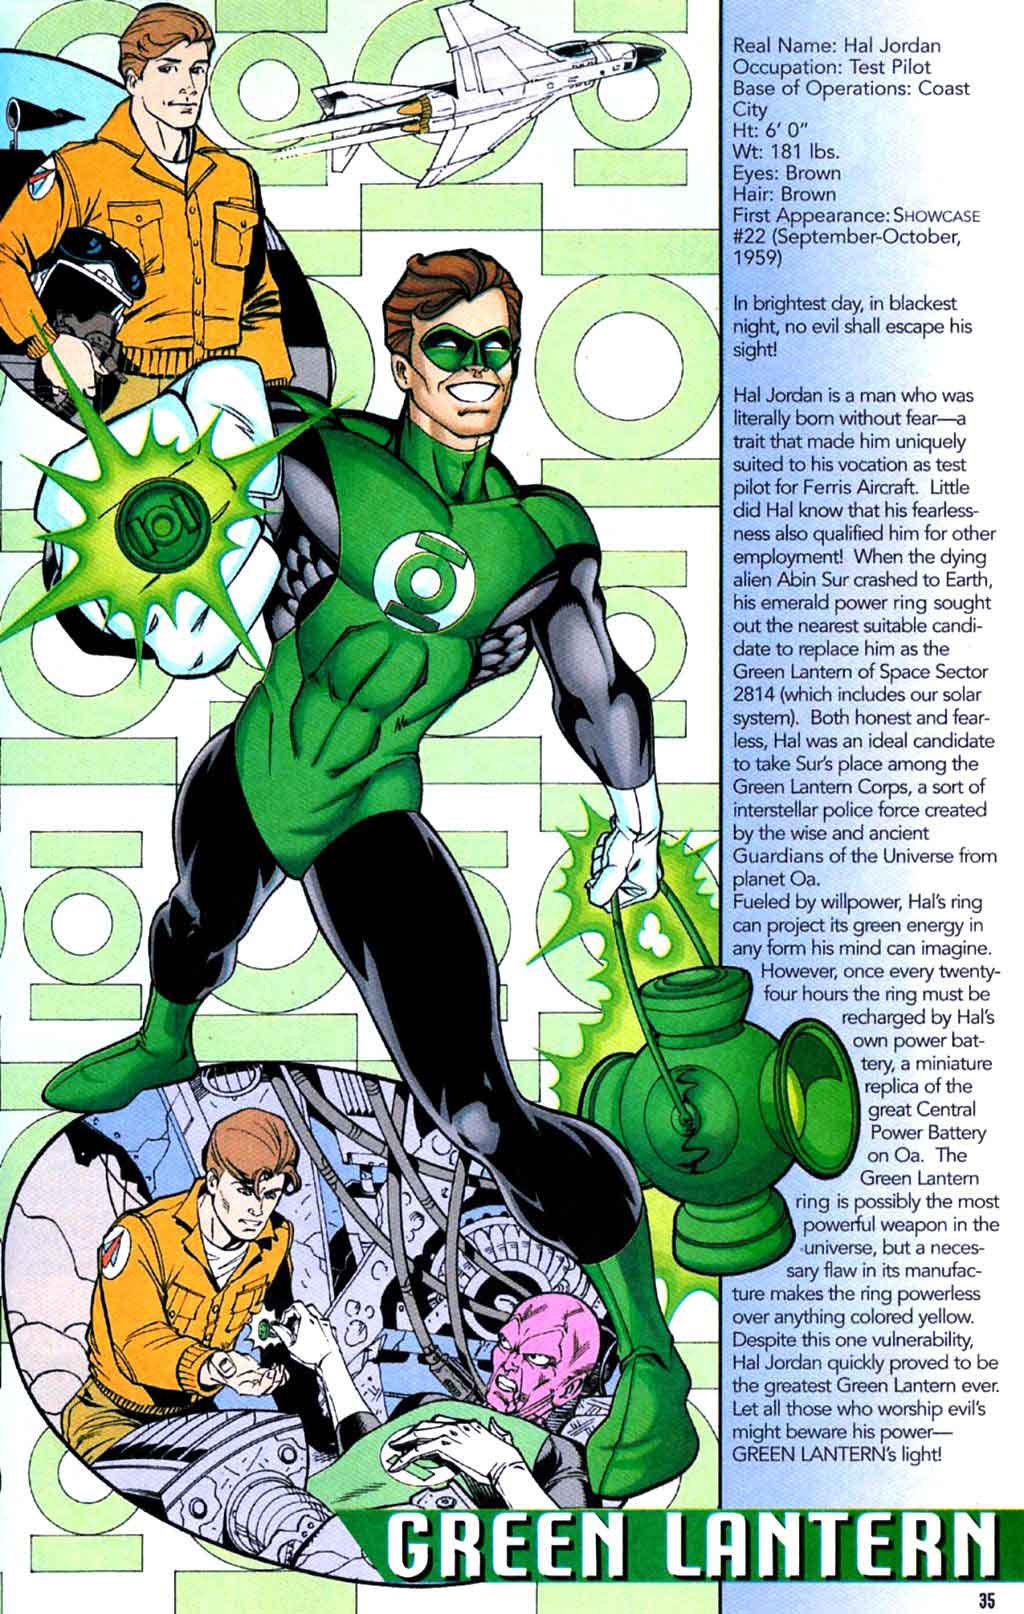 Green Lantern Hal Jordan by Scott Beatty & Claude St Aubin